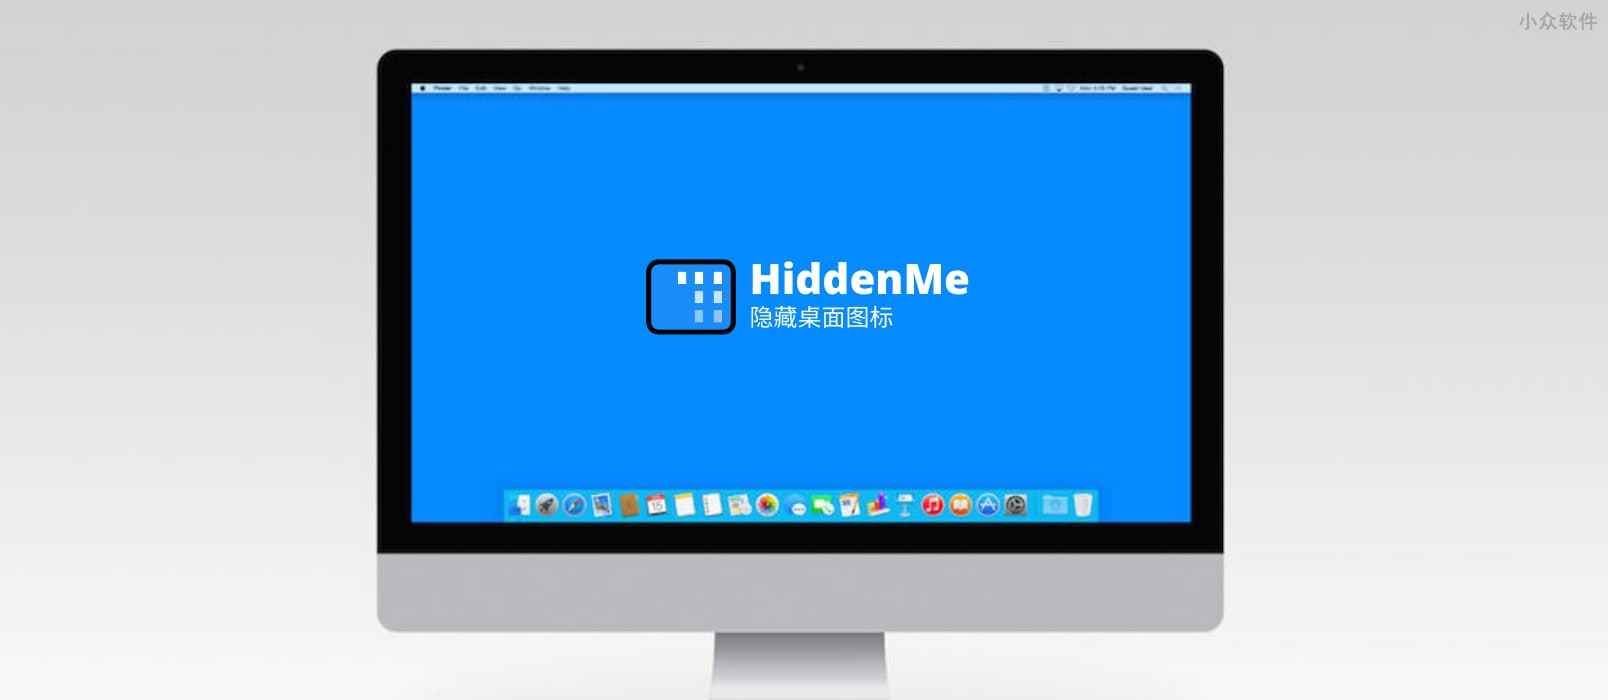 HiddenMe - 快速隐藏 macOS 桌面所有图标、文件 1